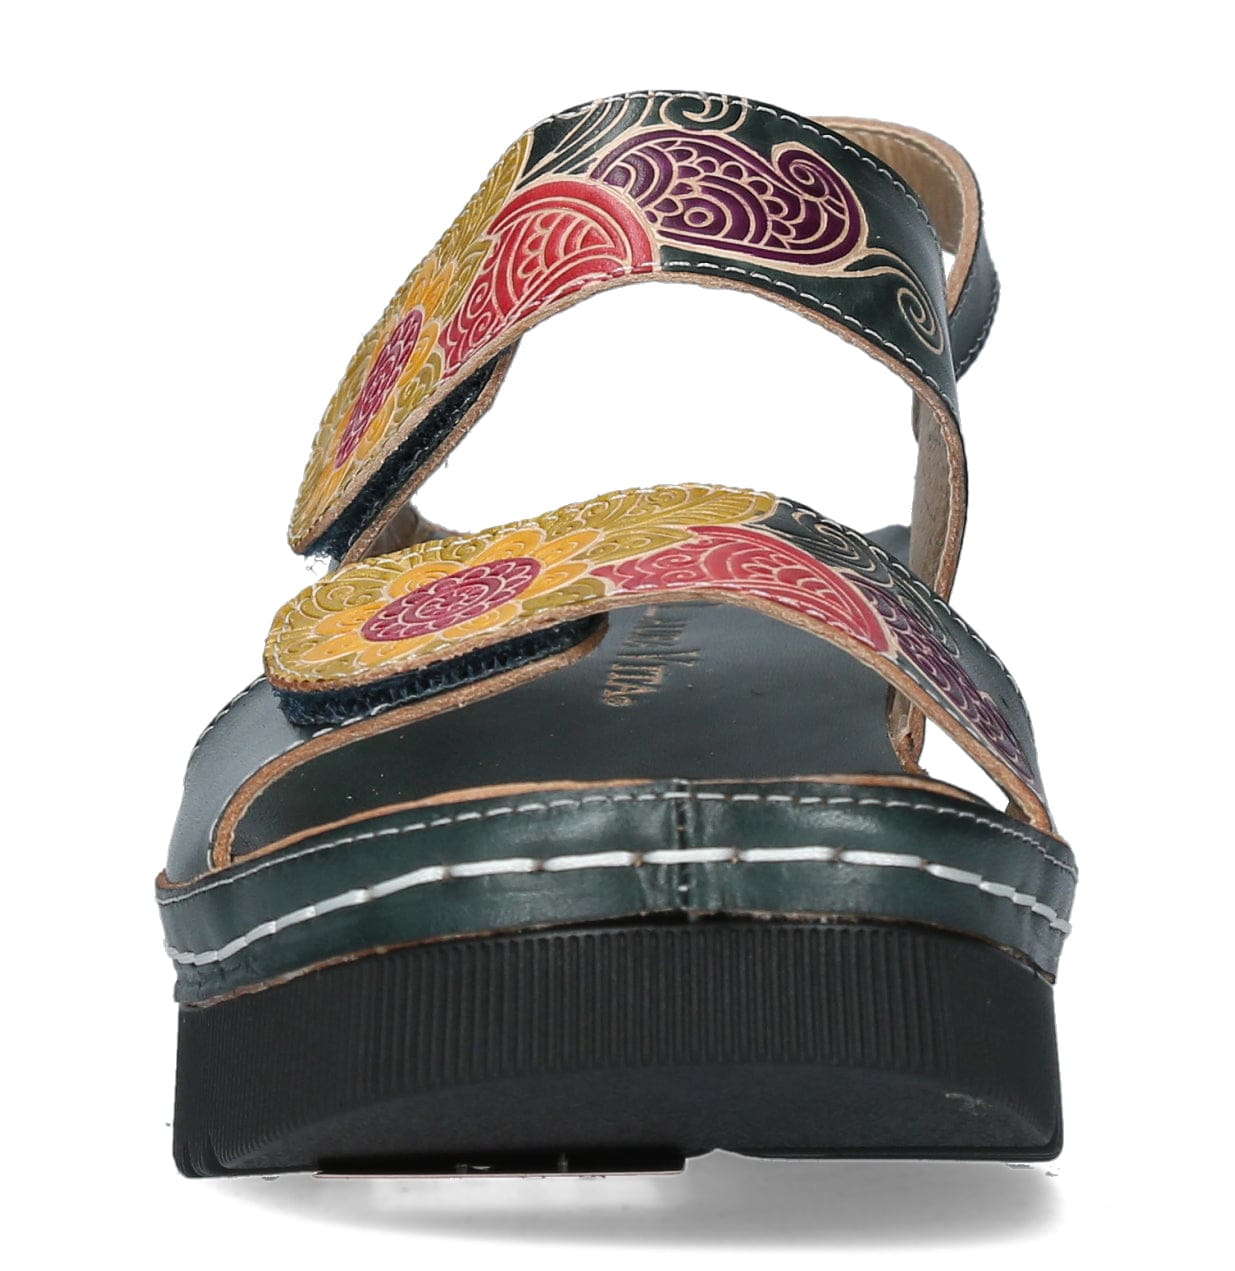 LEXIAO 01 shoes - Sandal